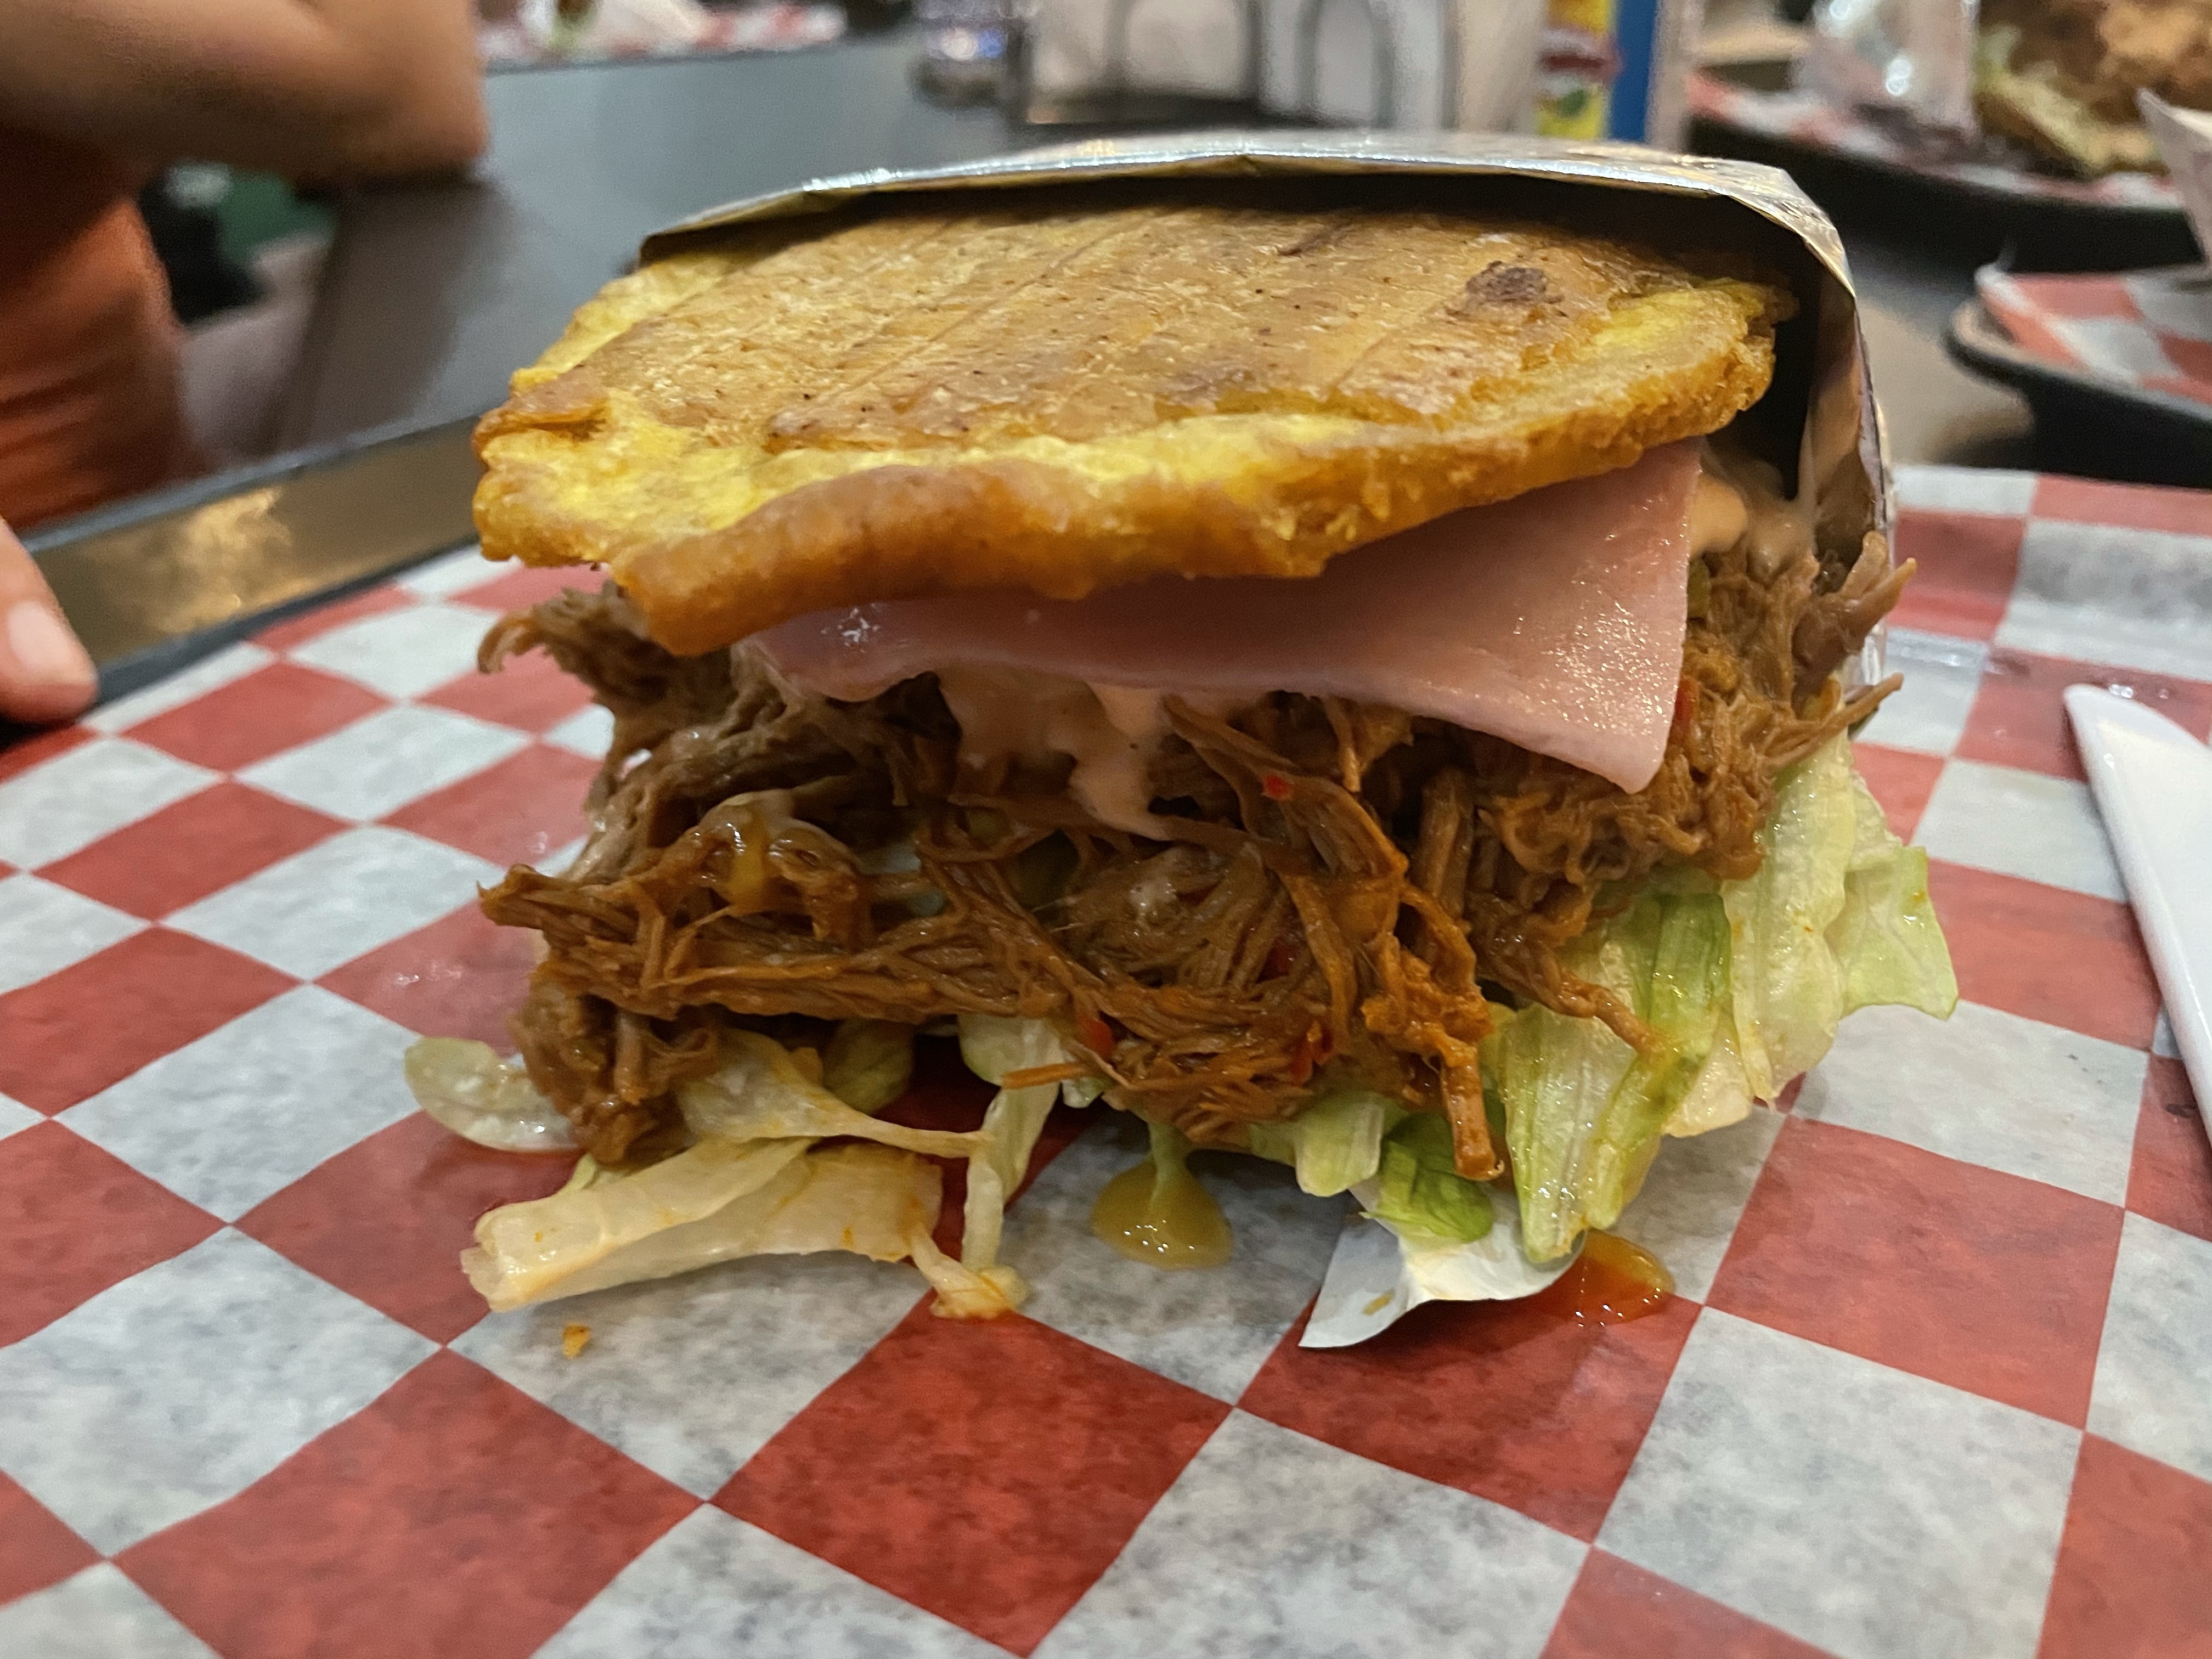 Pana’s Venezuelan Food Truck and Restaurant Foodie Review in Tulsa, Oklahoma